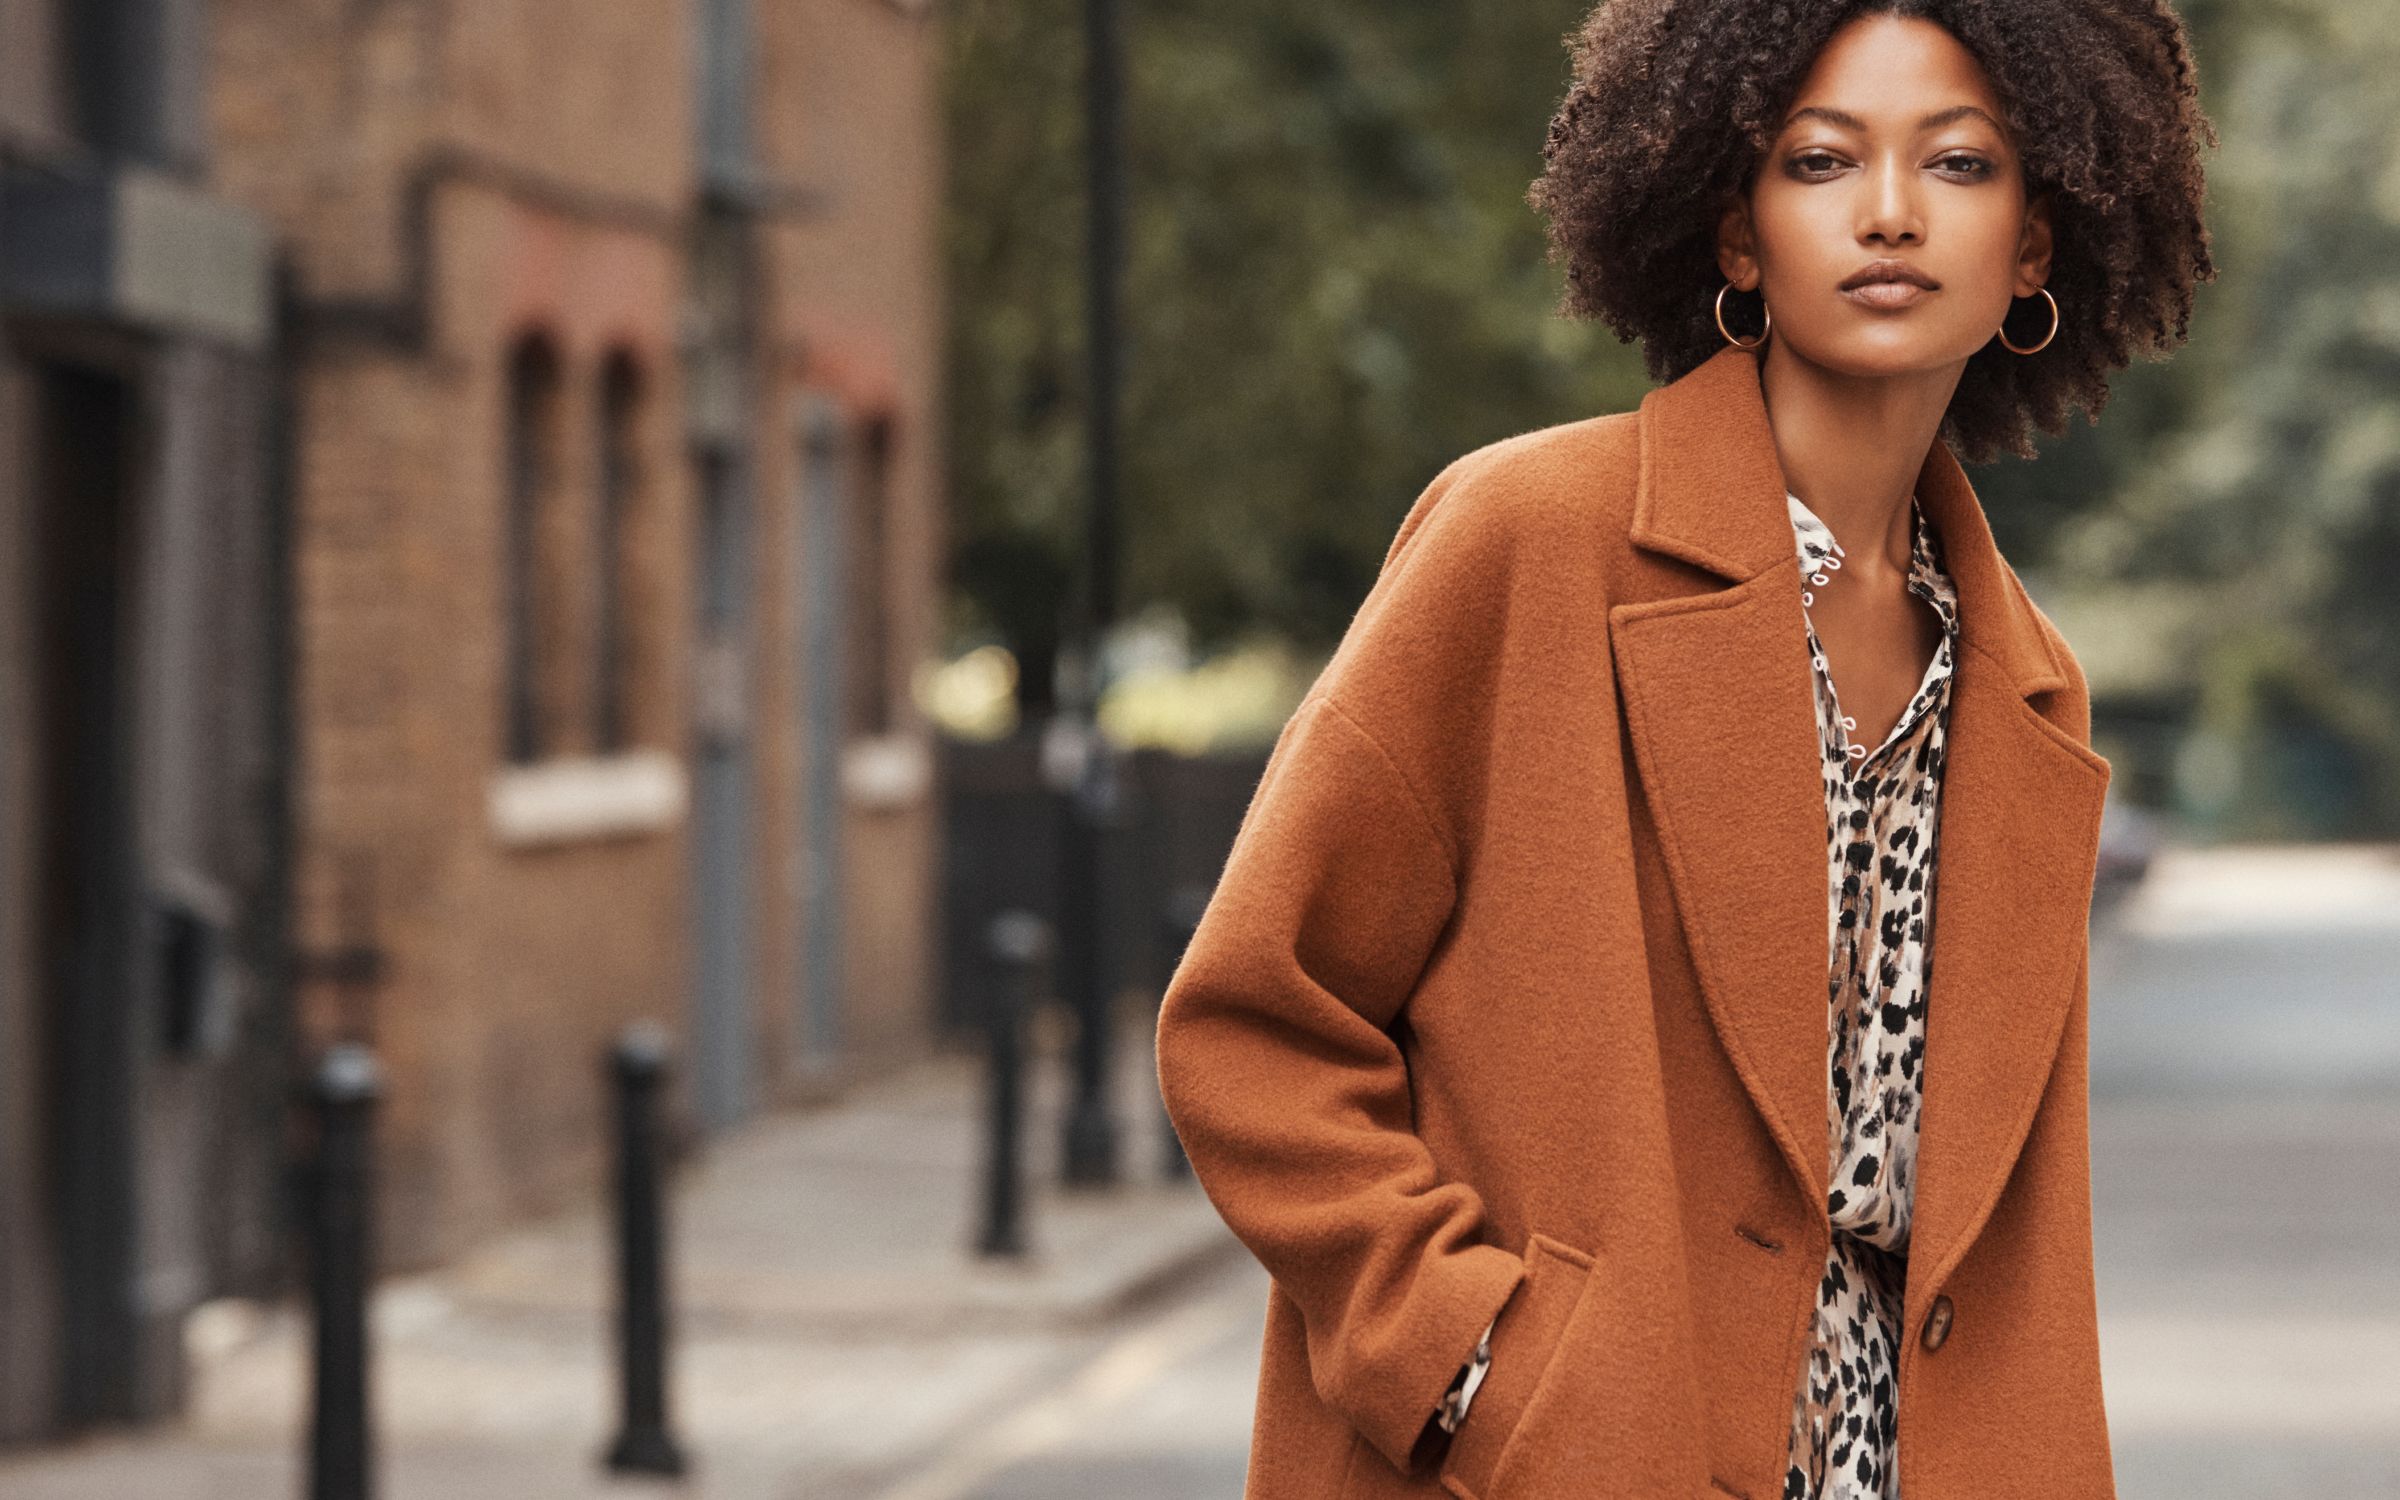 A Women's guide to fashionable winter coats